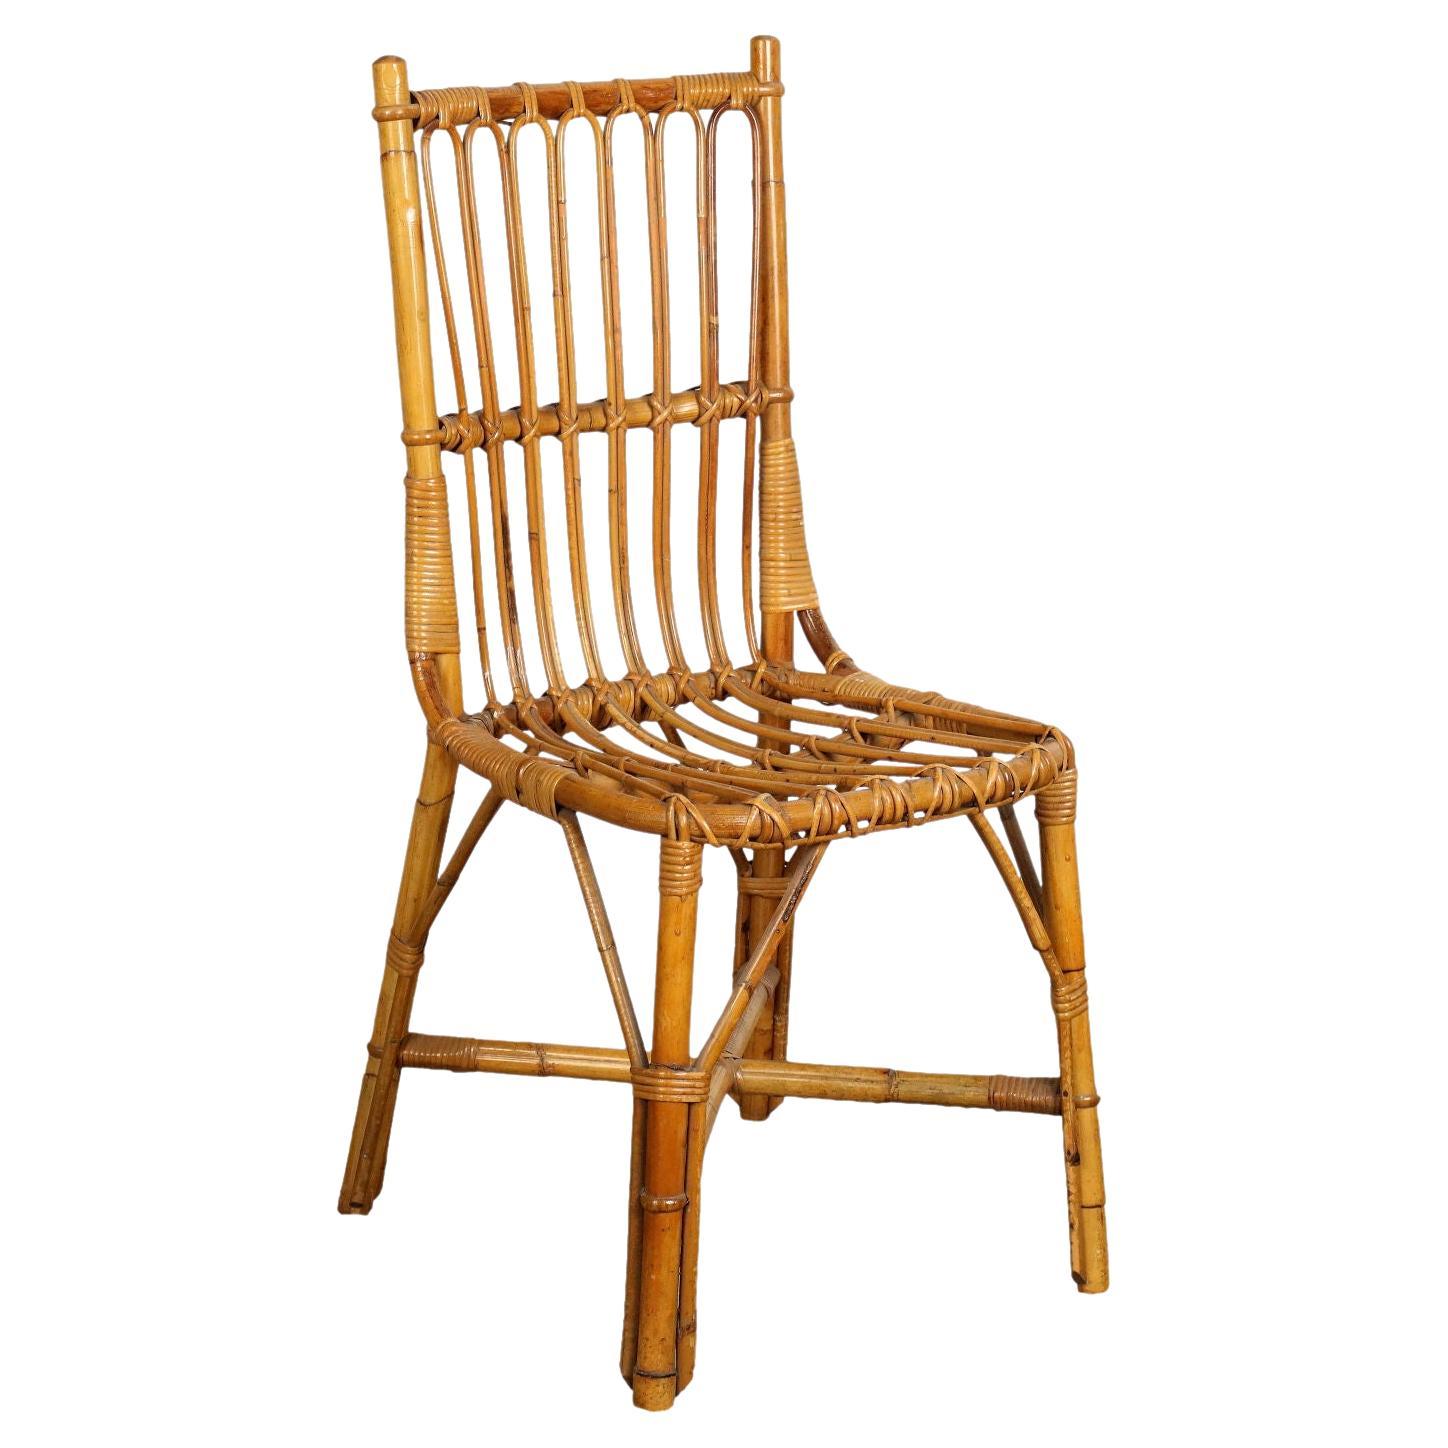 Vintage-Stuhl aus Bambus, Italien, 1960er Jahre